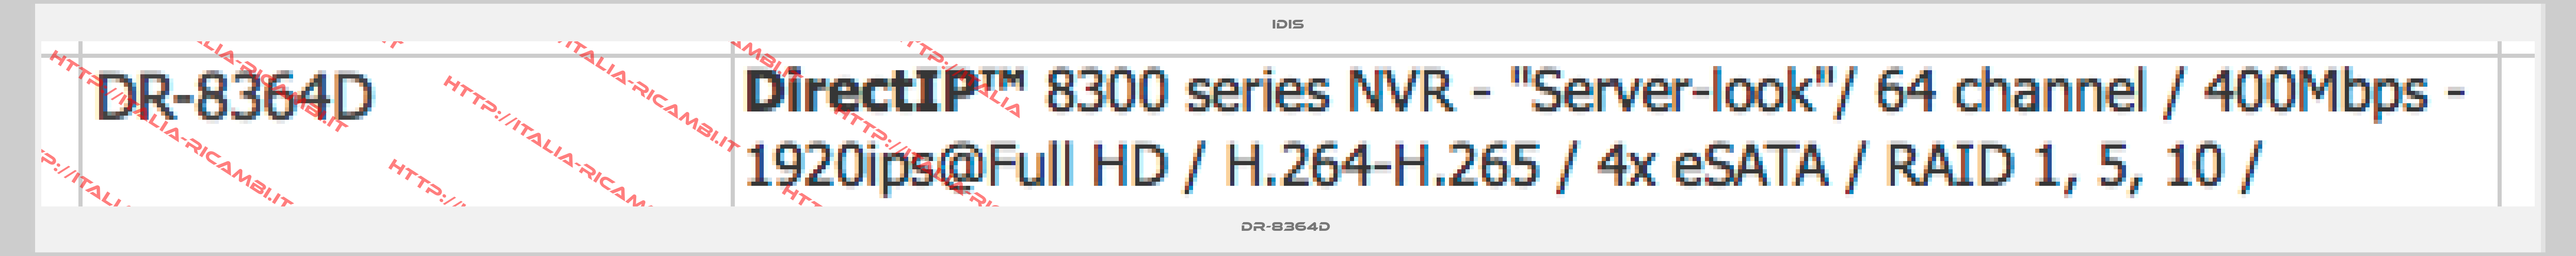 IDIS-DR-8364D 